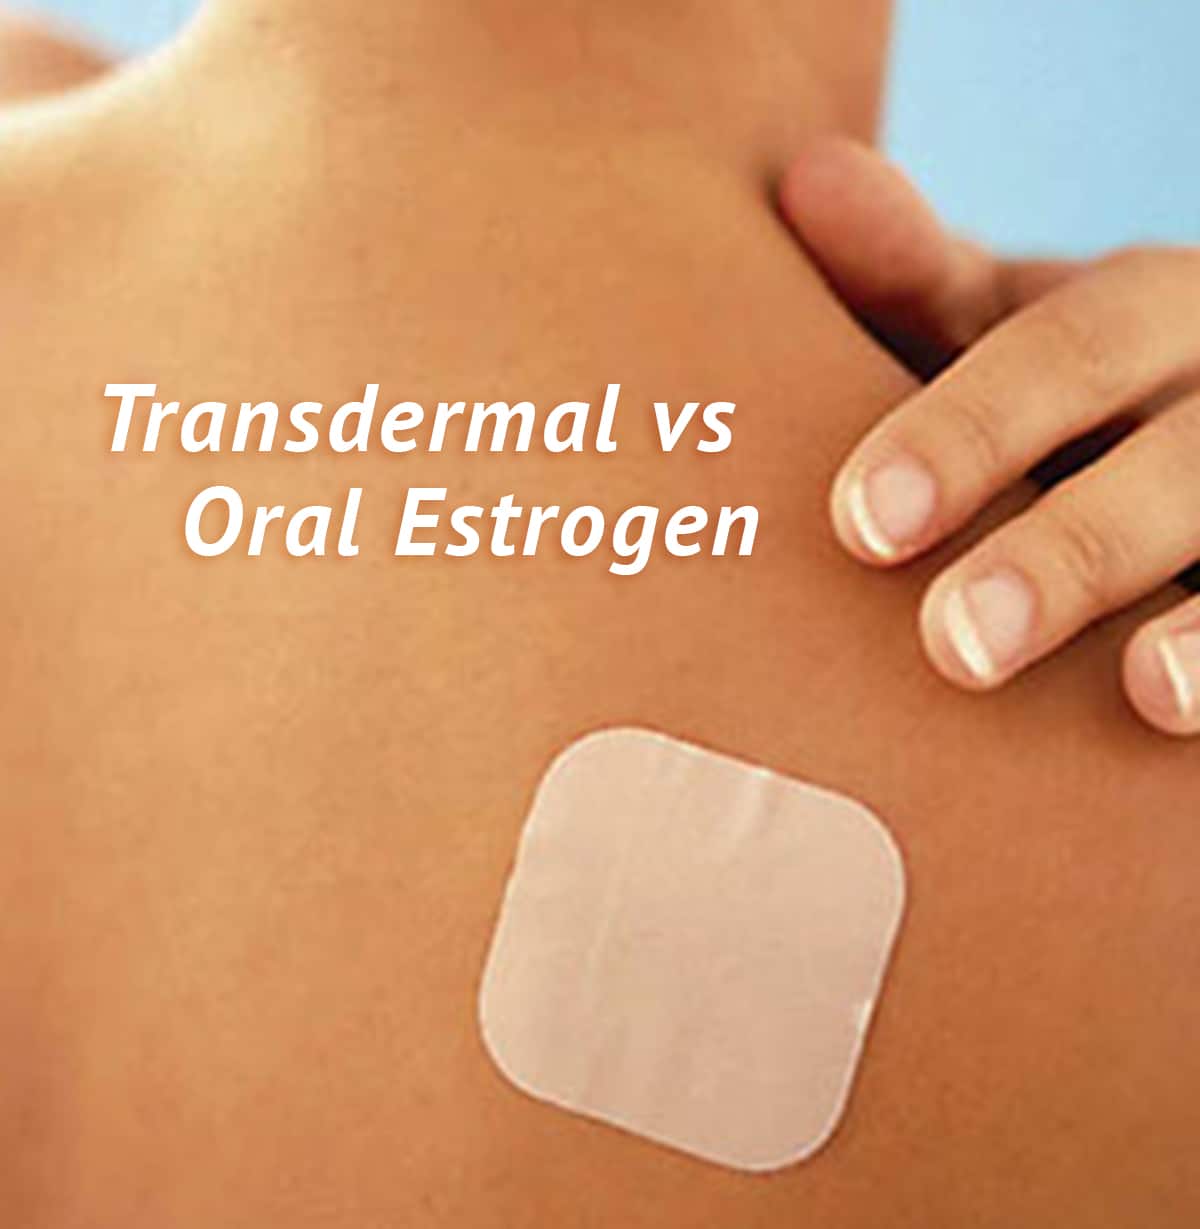 Transdermal Estrogen vs. Oral Estrogen